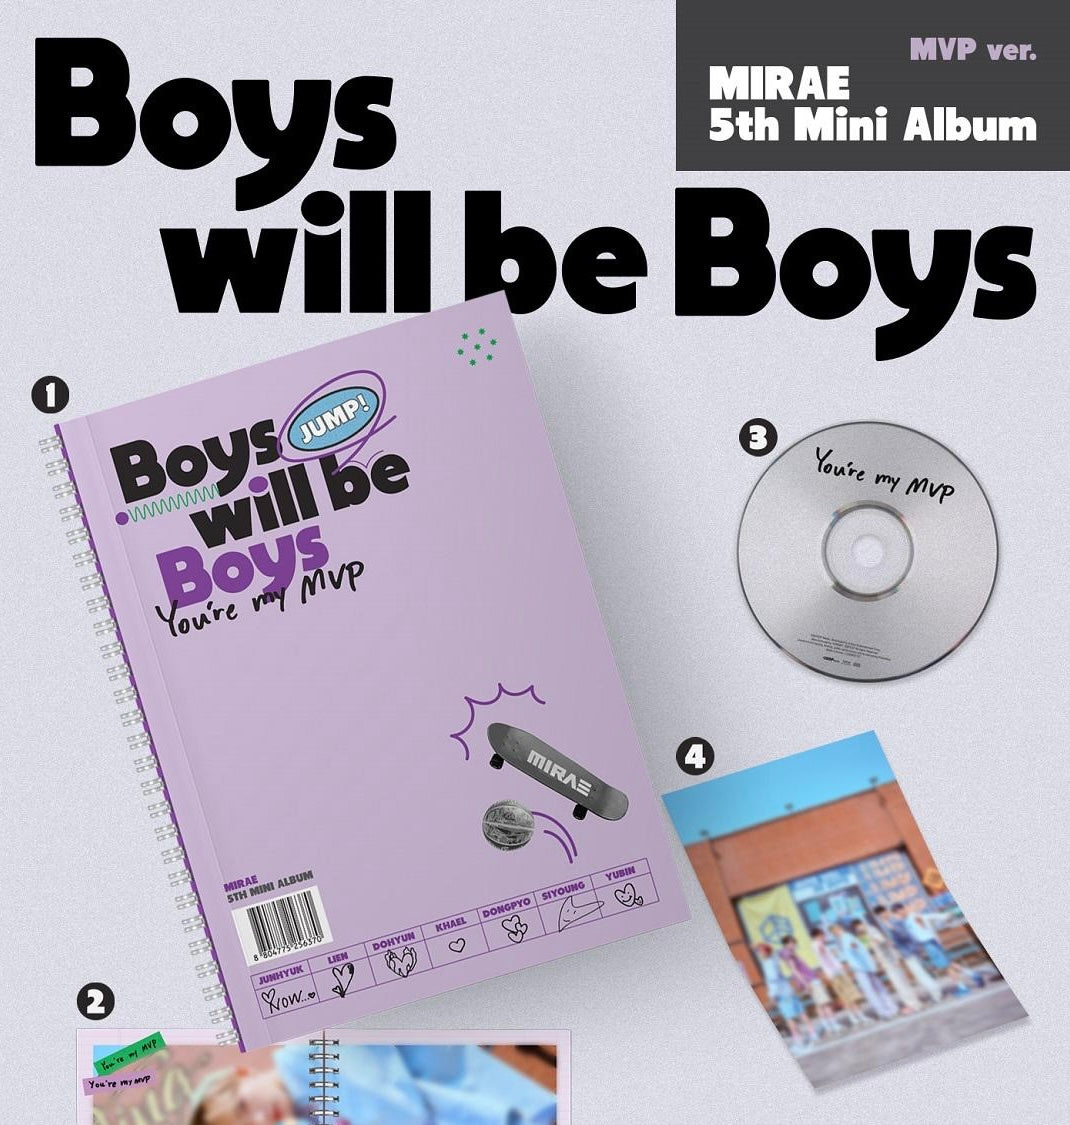 MIRAE - Boys will be Boys